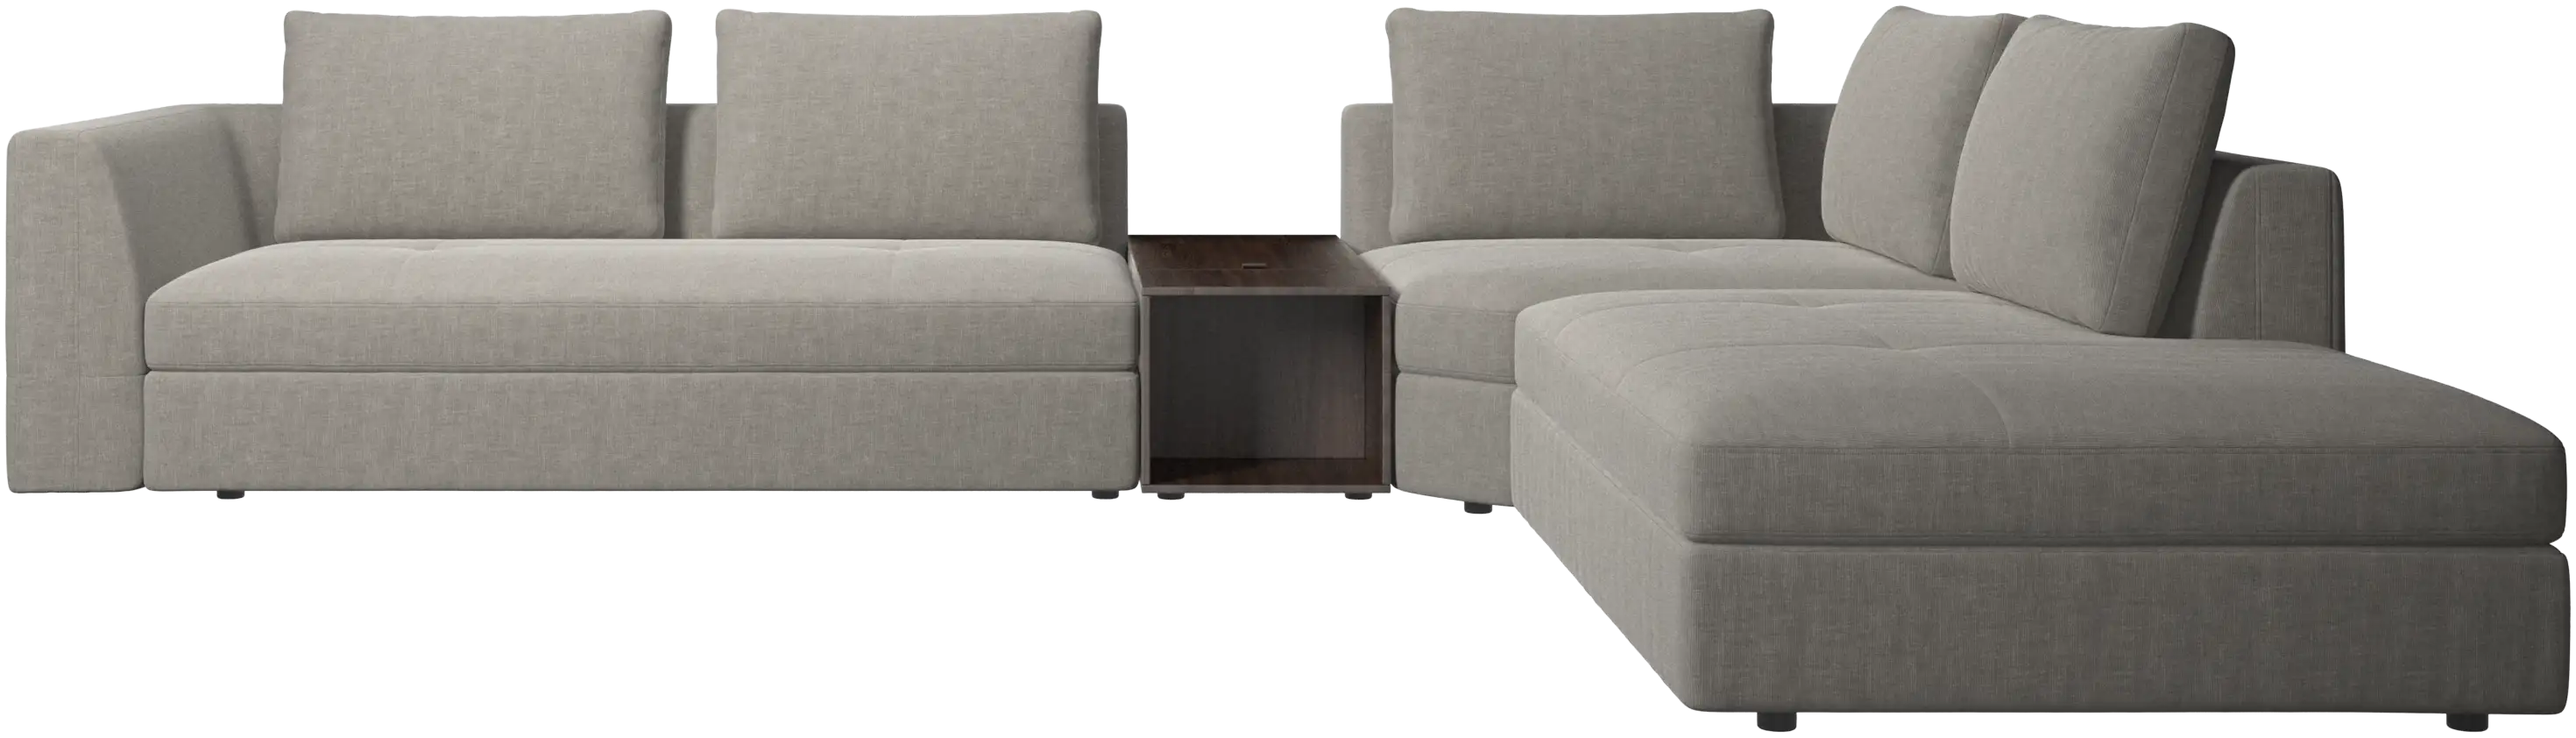 Bergamo corner sofa with lounging unit and pouf w/storage